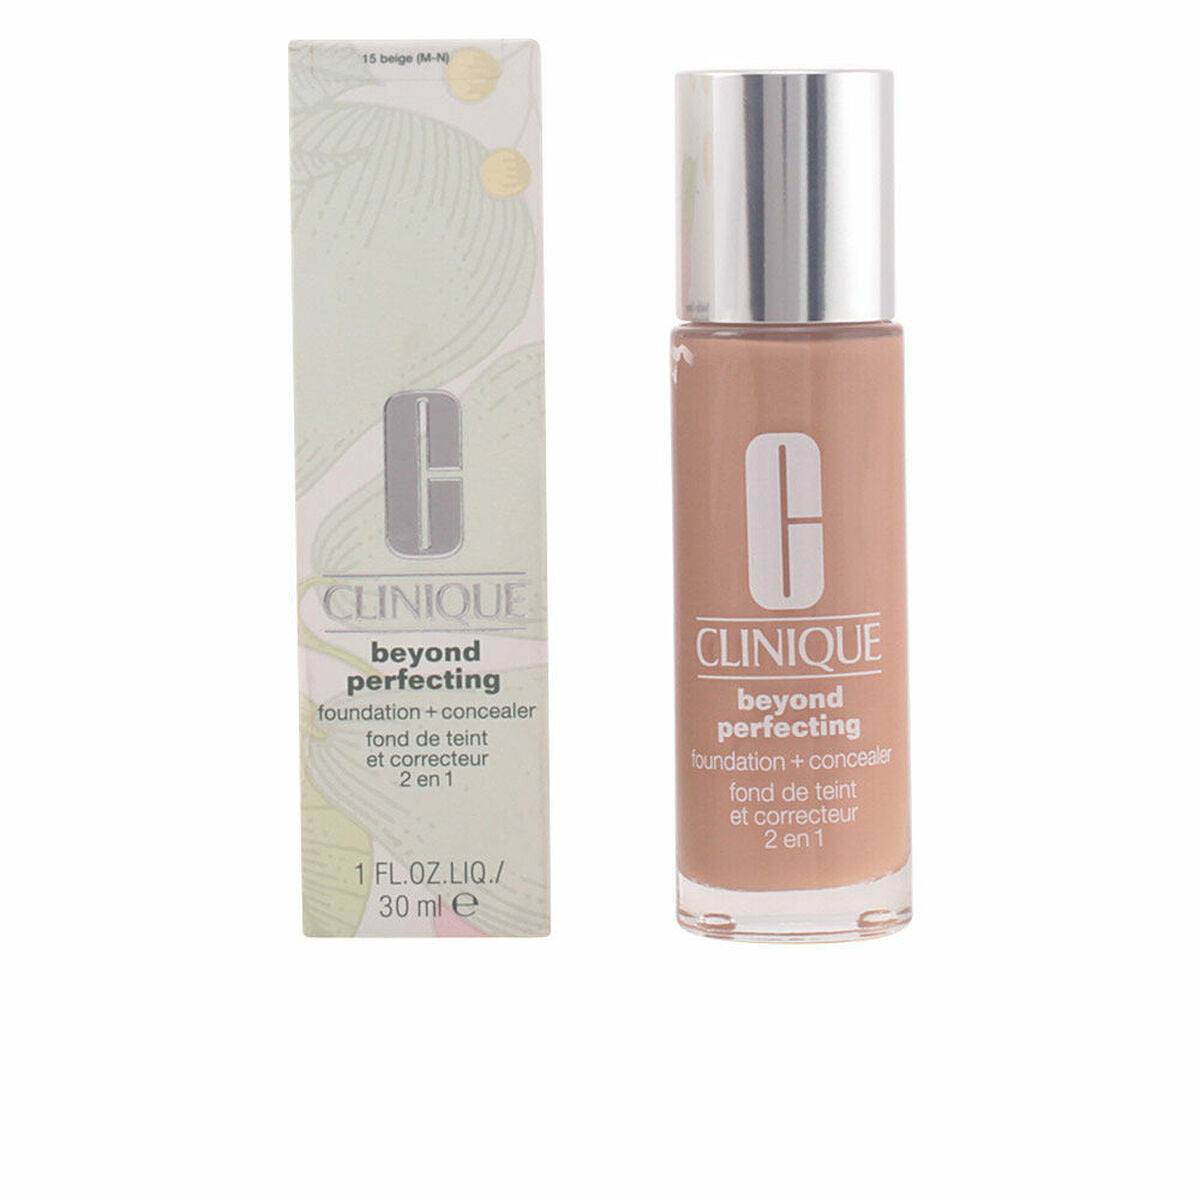 Fluid Makeup Basis Clinique Beyond Perfecting 2-in-1 15-beige (30 ml) - CA International  